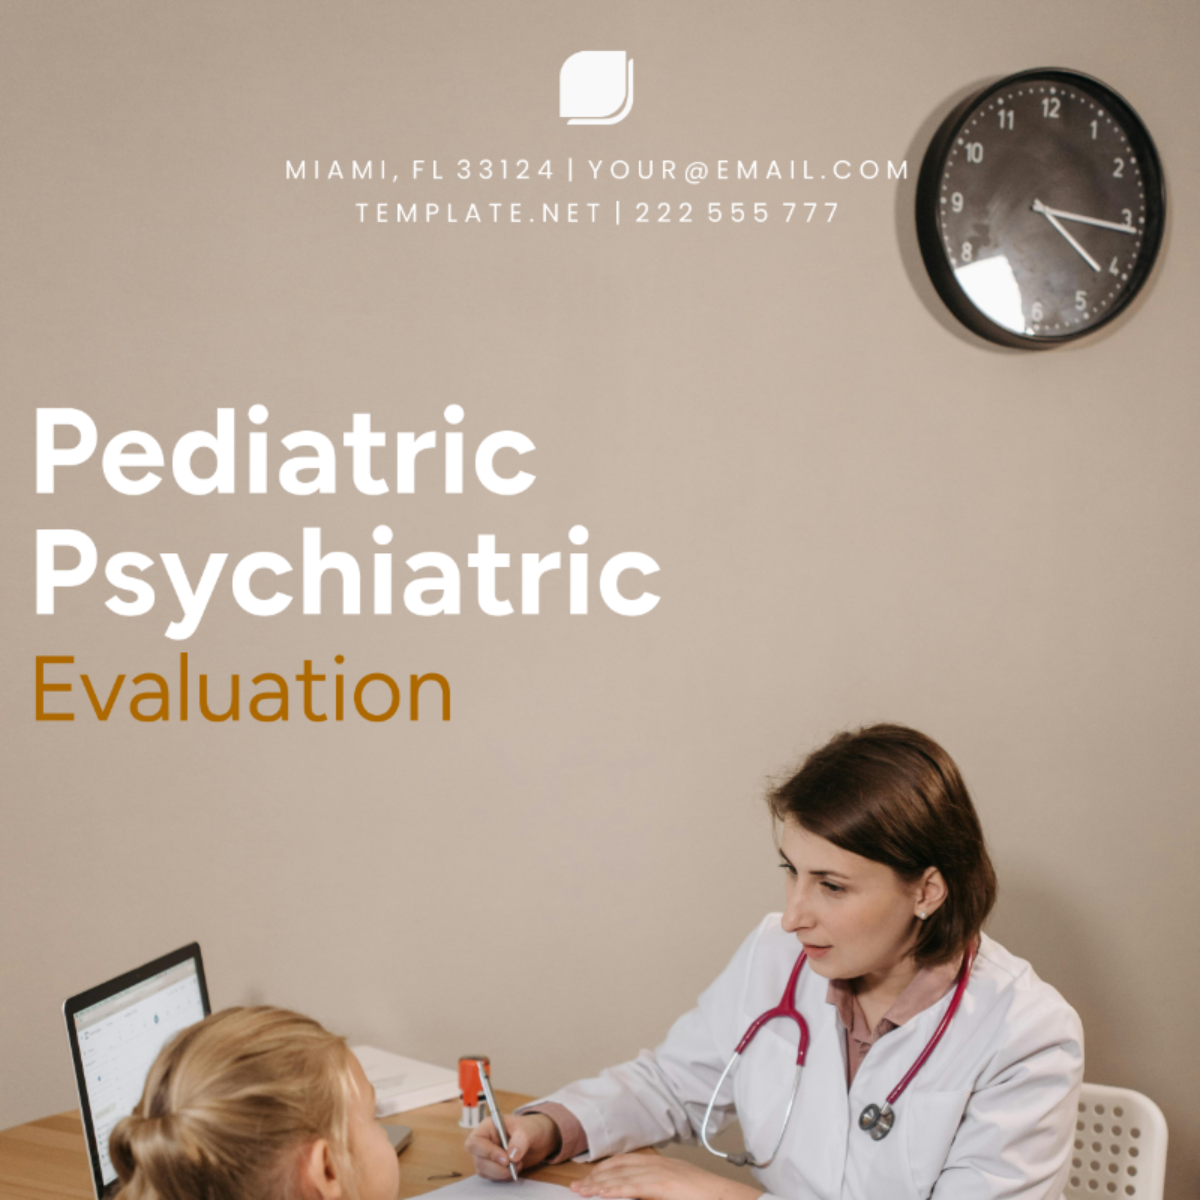 Free Pediatric Psychiatric Evaluation Template